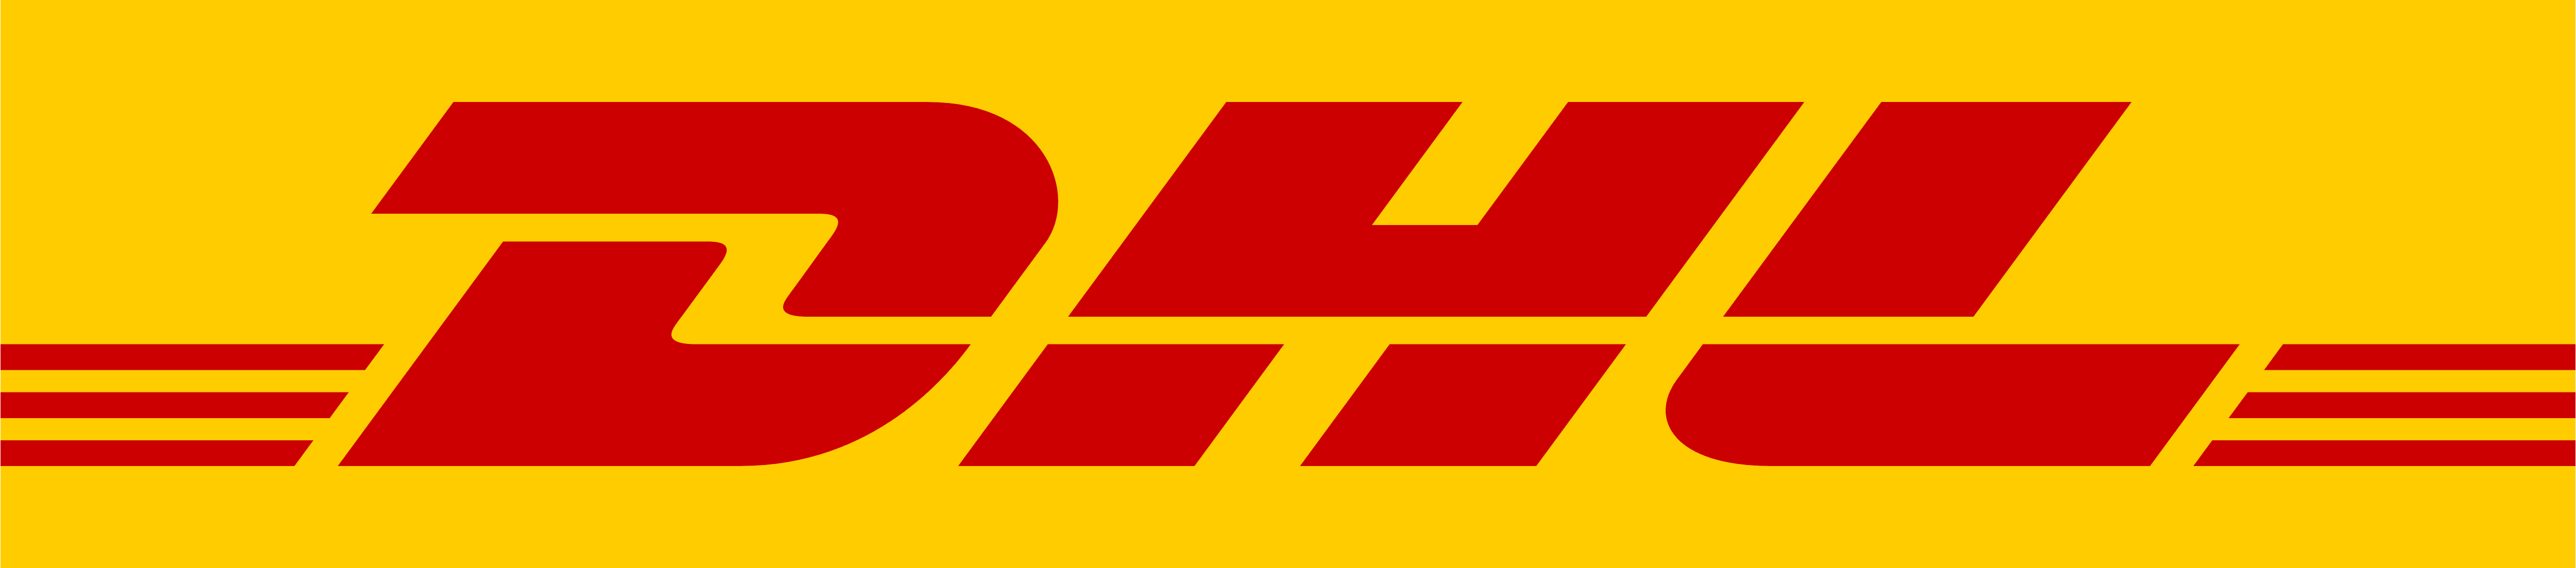 DHL New Logo - DHL – Logos Download